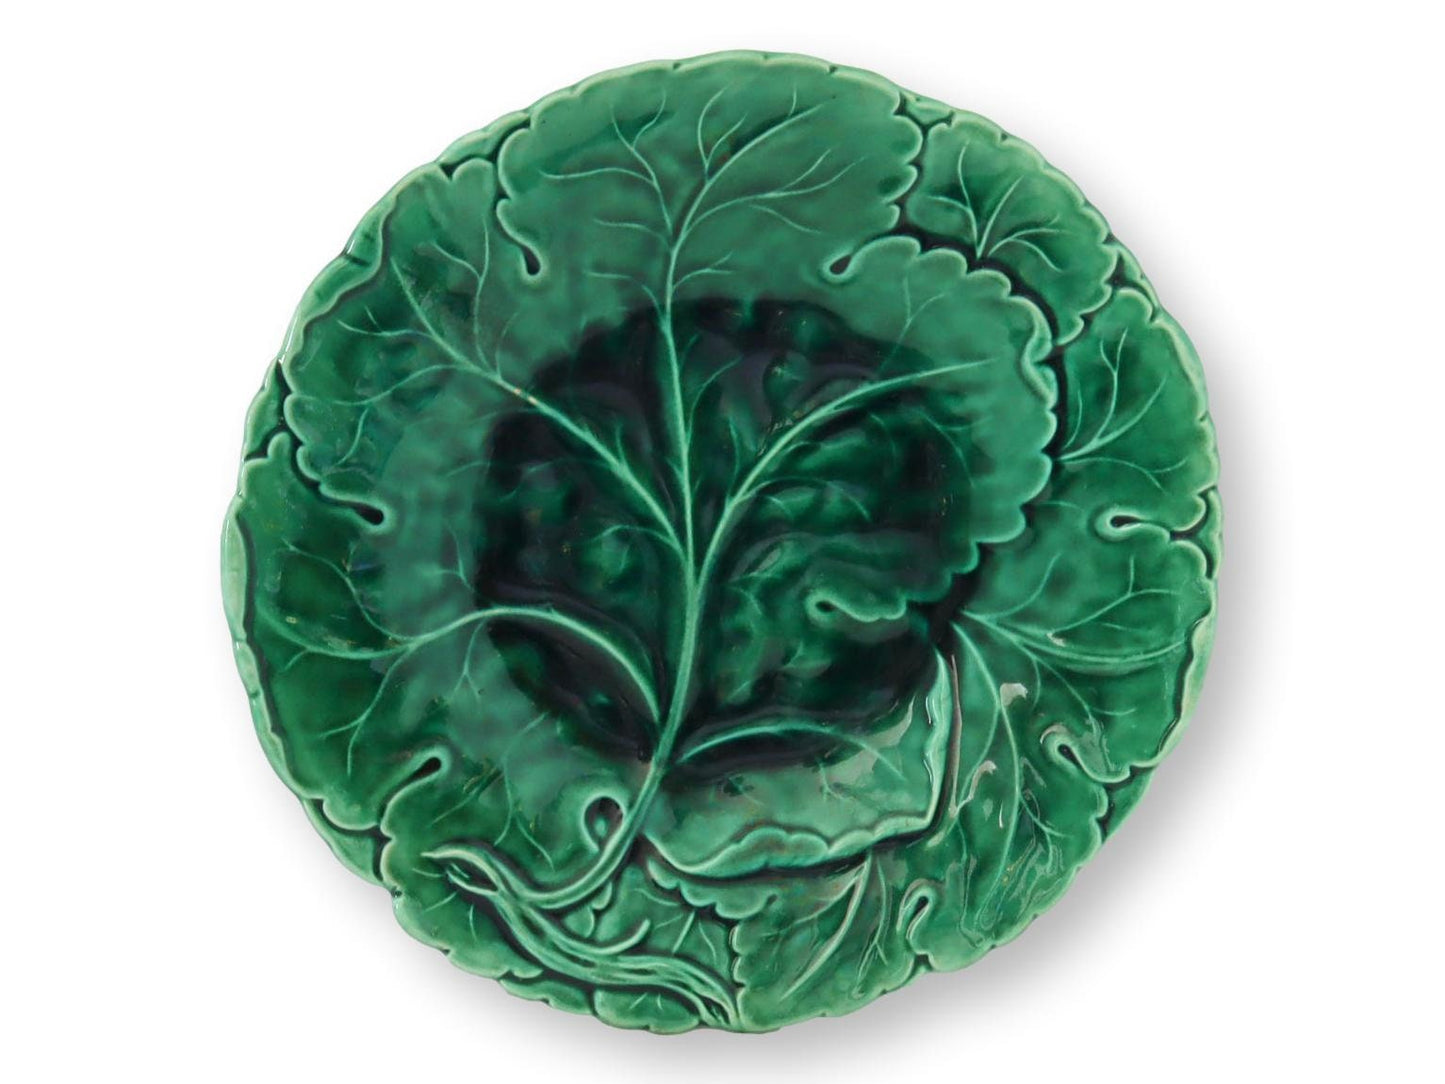 Antique Minton's Majolica Cabbage Leaf Plates, Set of 9